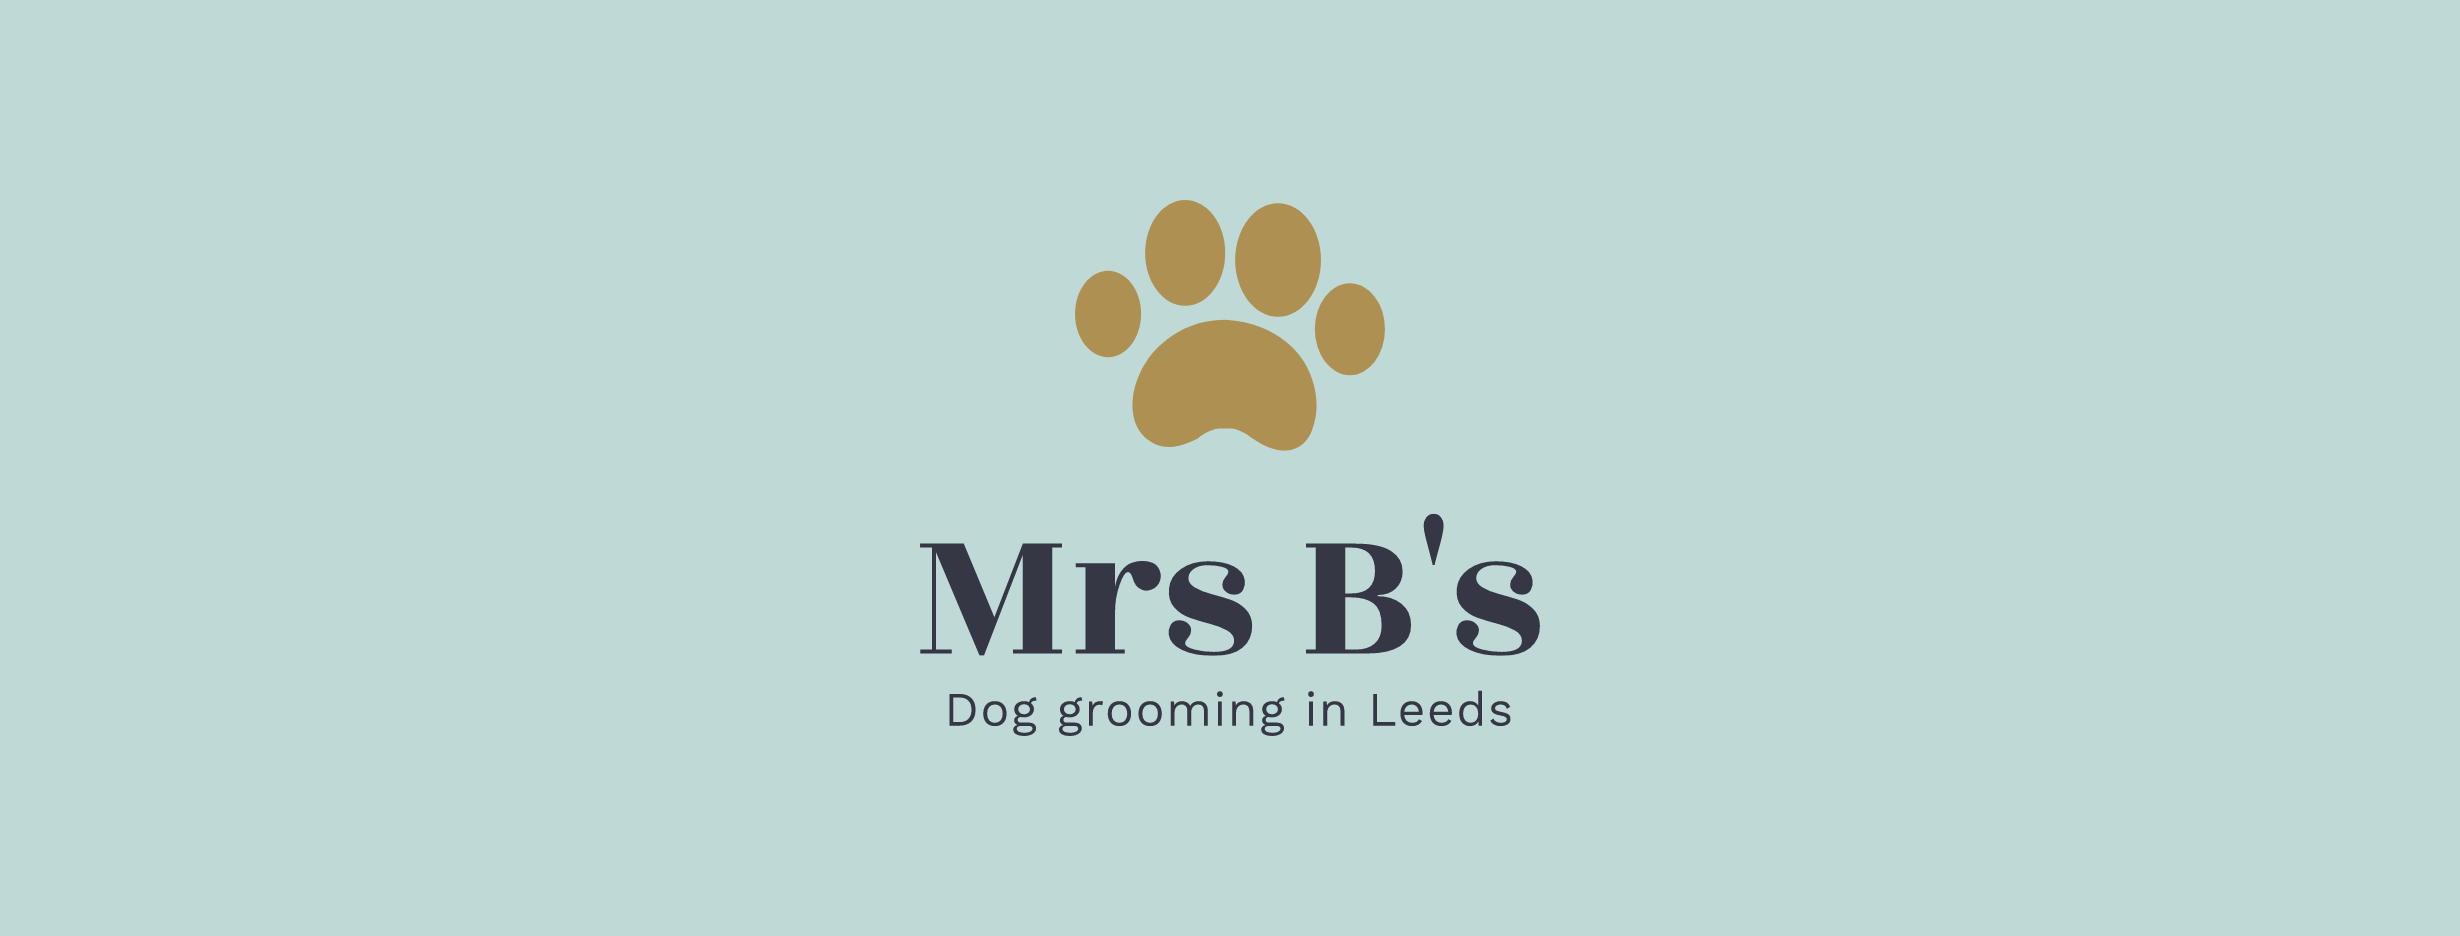 Dog grooming in Leeds